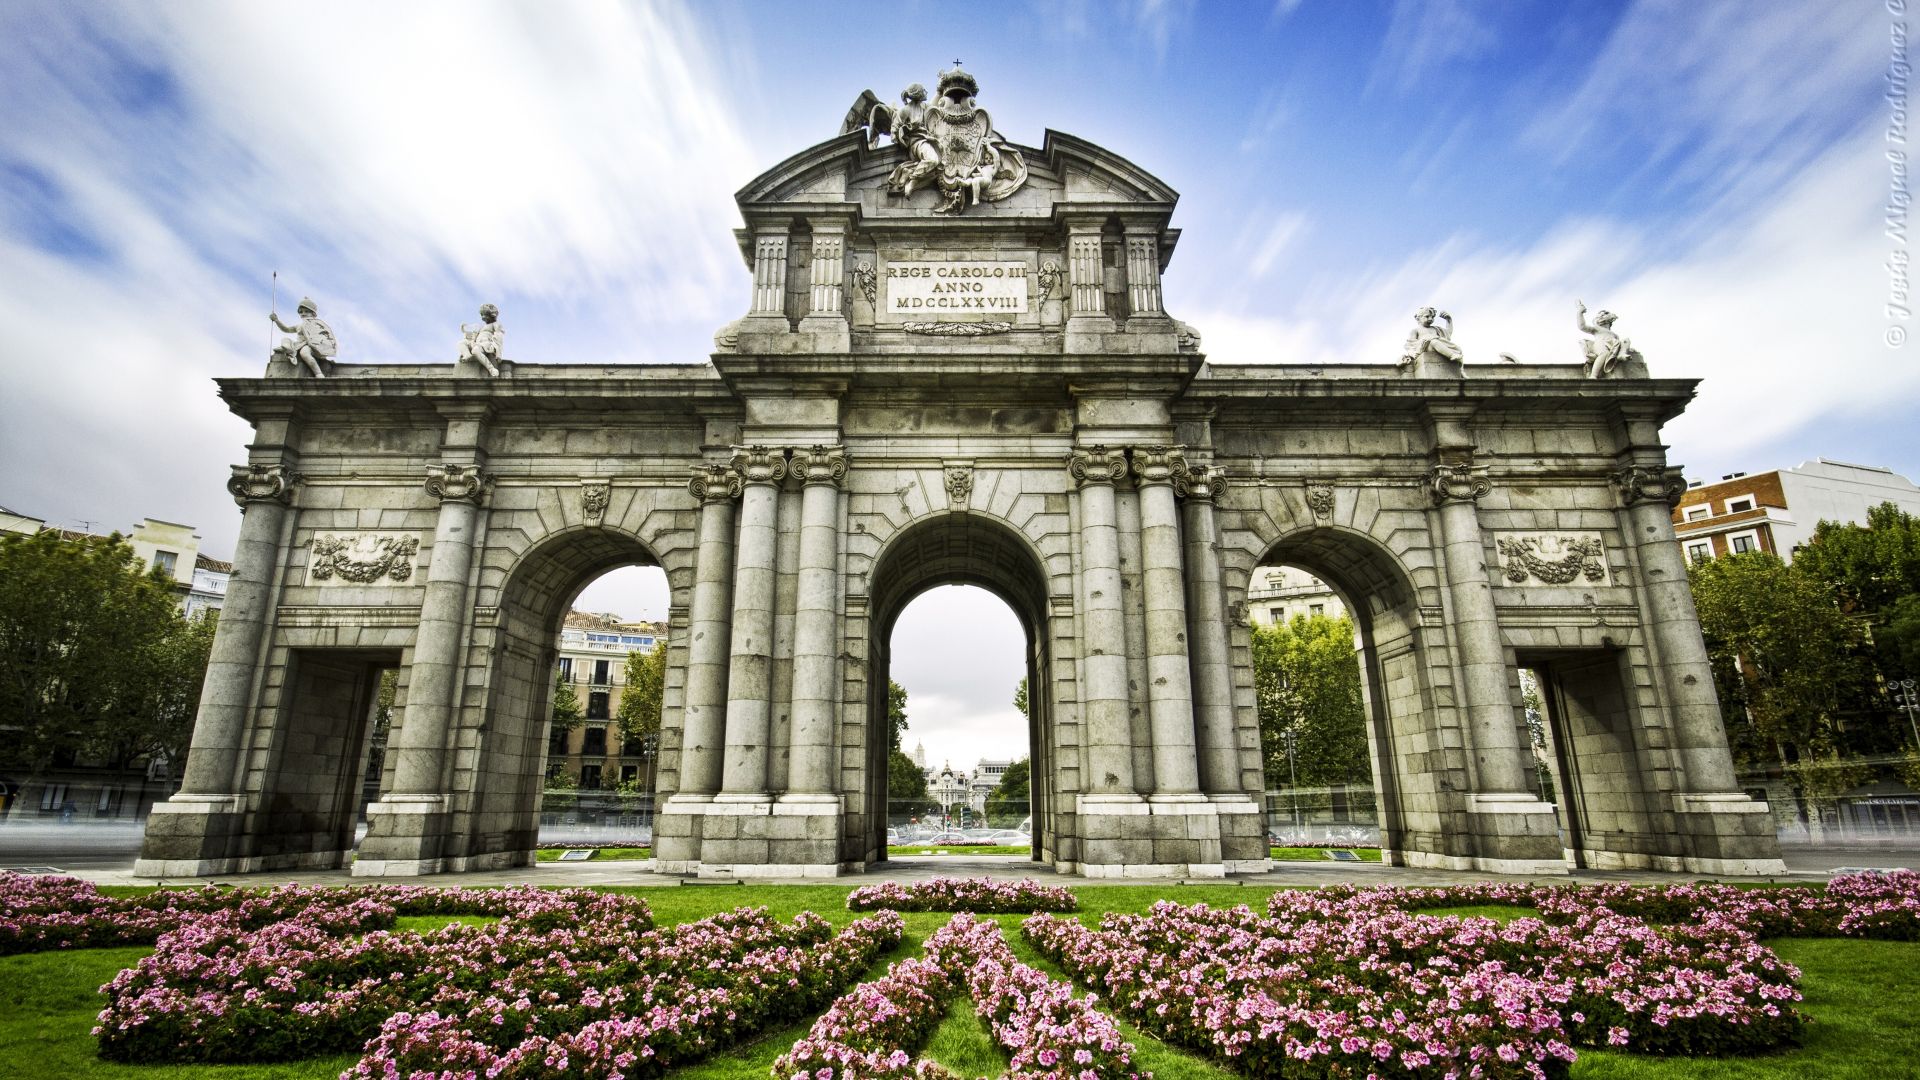 Puerta de Alcala, Madrid, Spain, tourism, travel (horizontal)